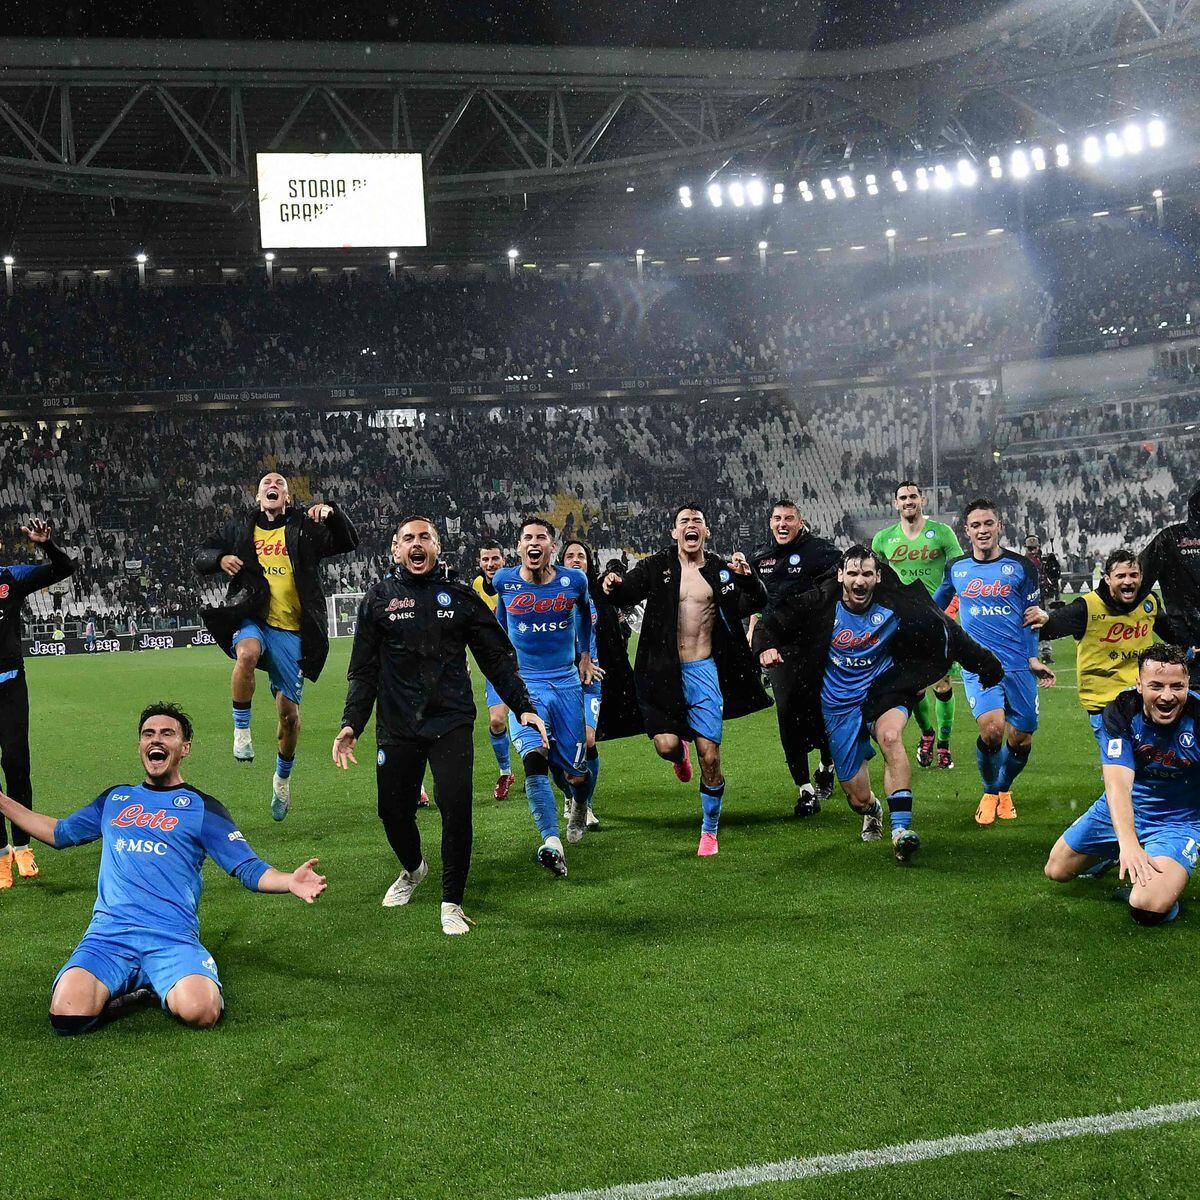 Italian Football News 🇮🇹 on X: The Napoli story in context